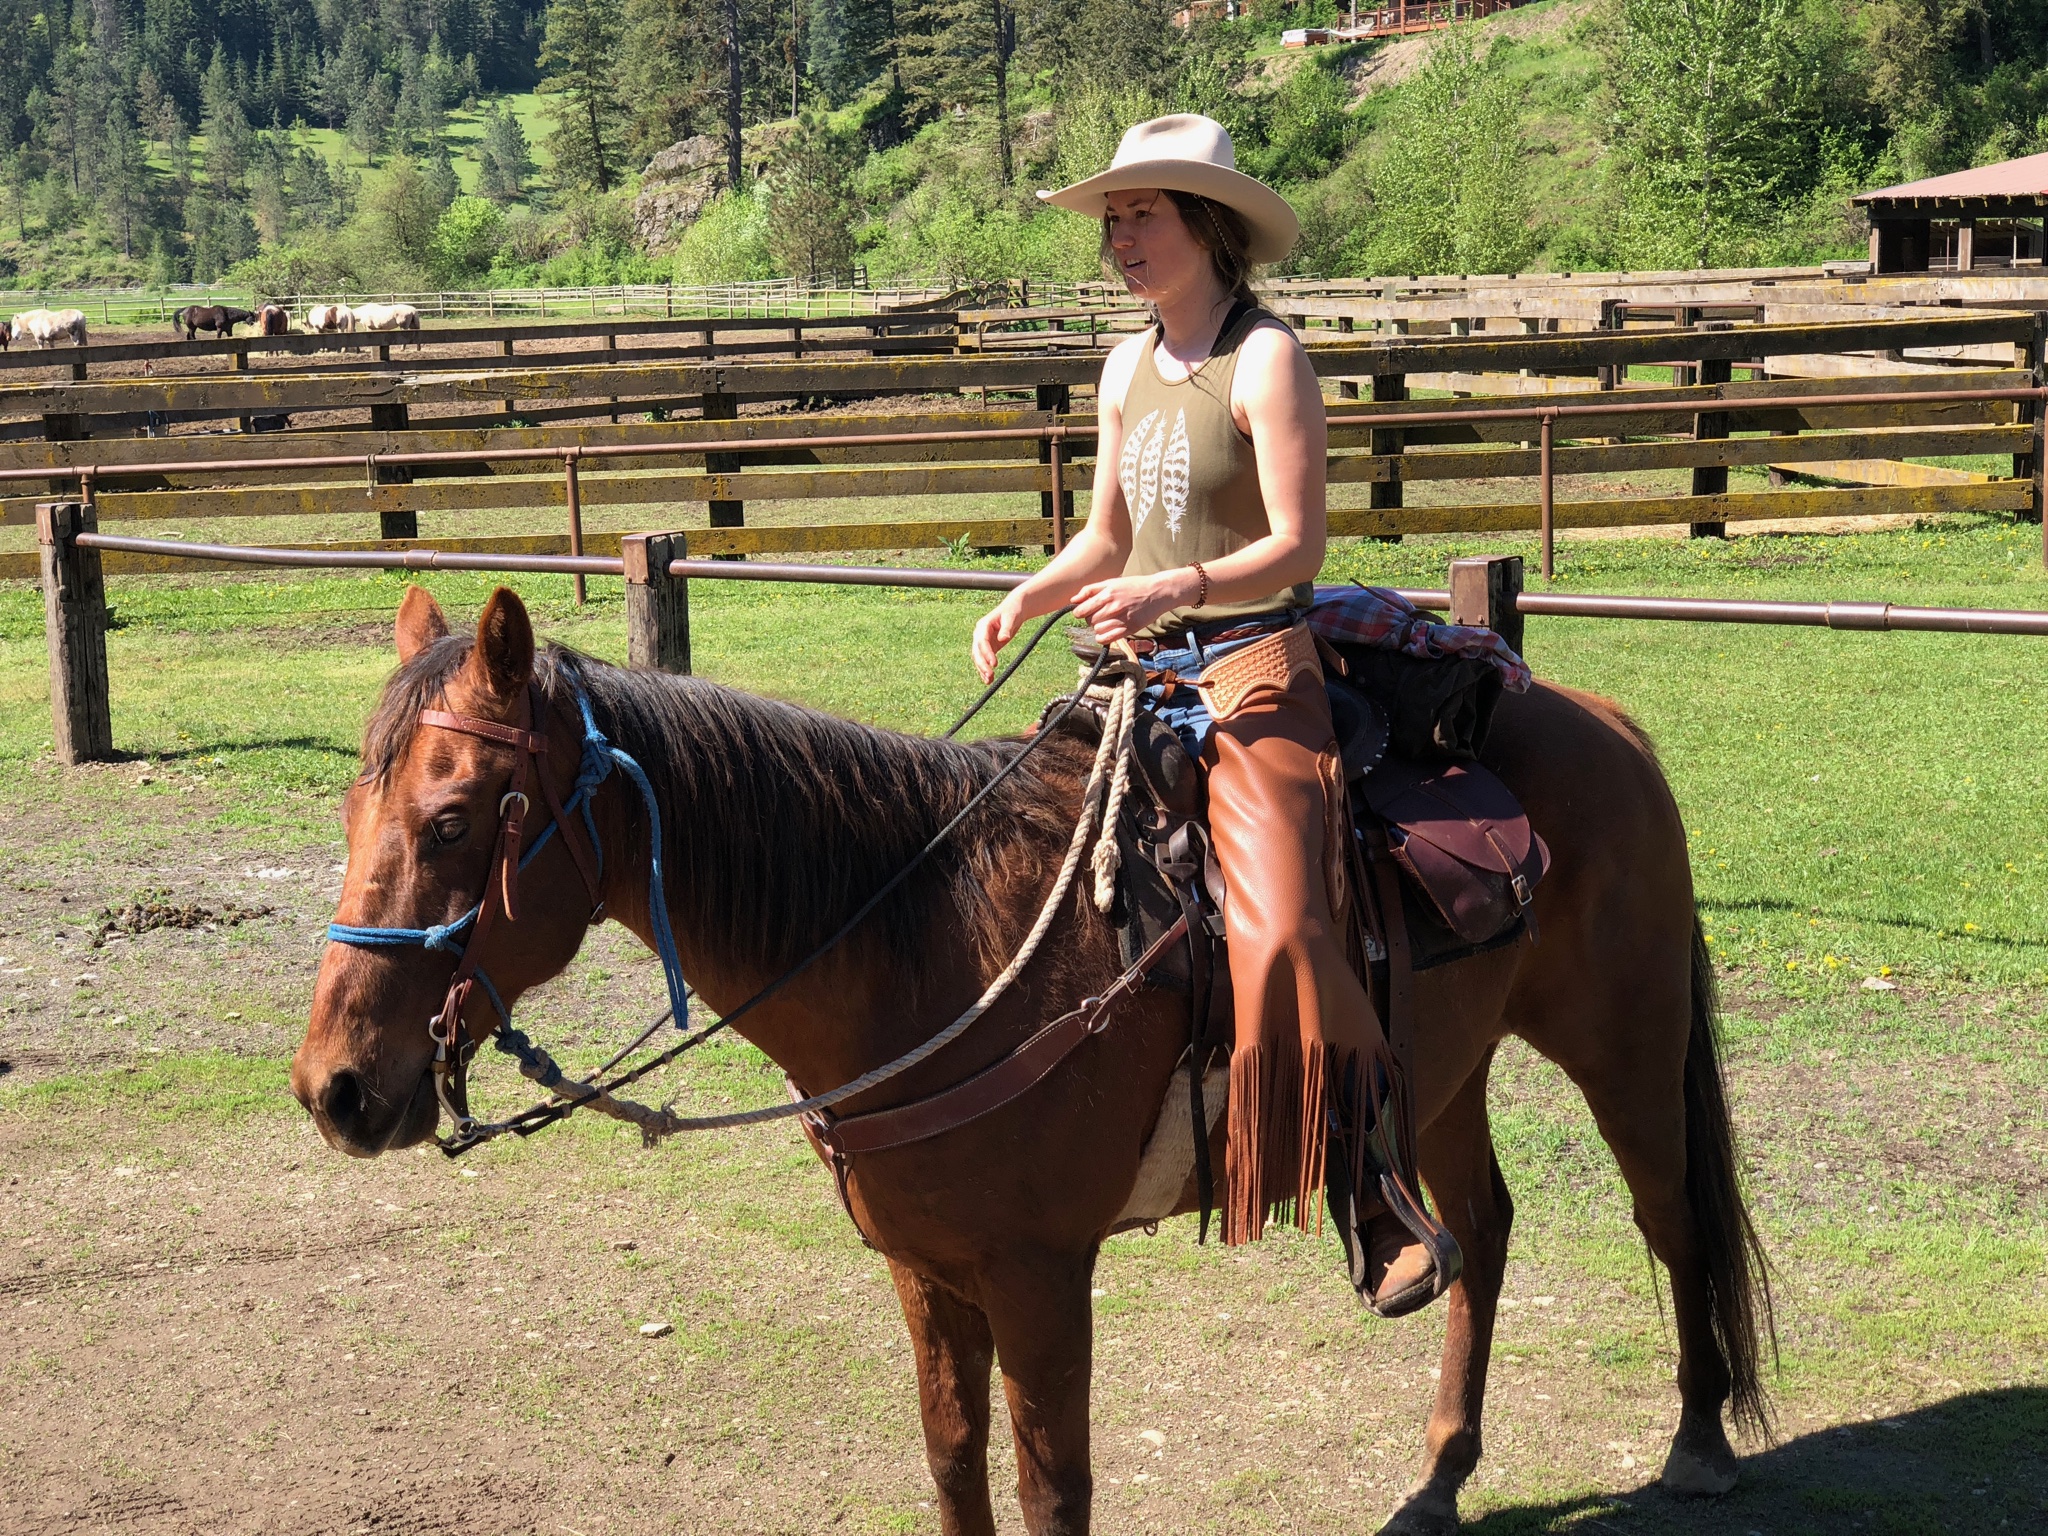 Young woman on horseback.